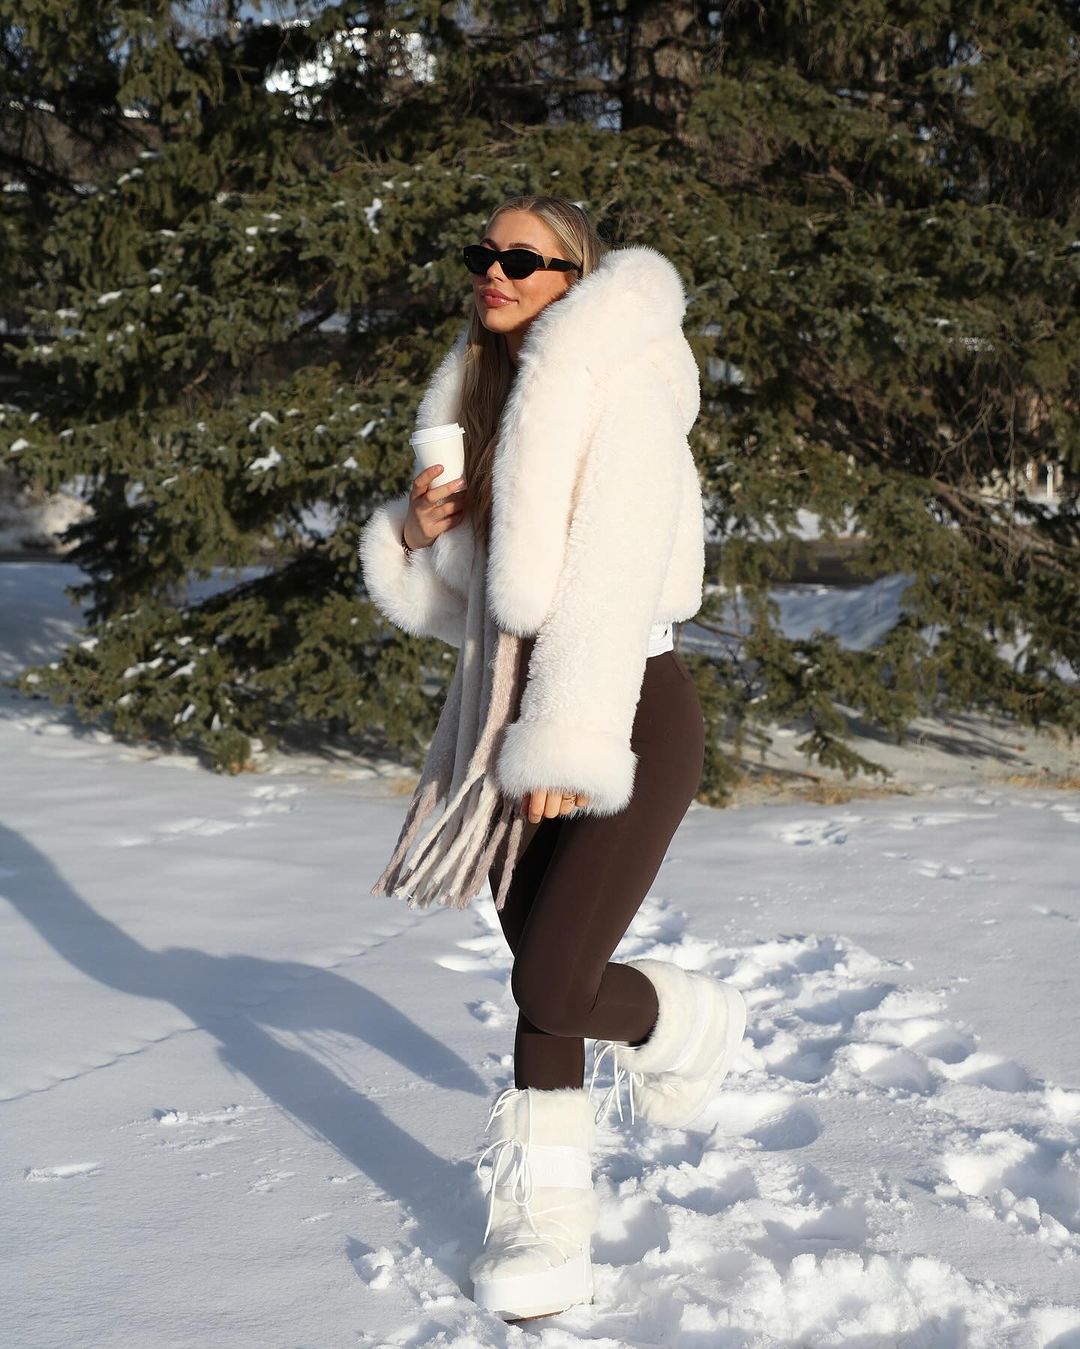 Jutta Leerdam Shines as a Winter Wonderland Enthusiast! - 12thBlog